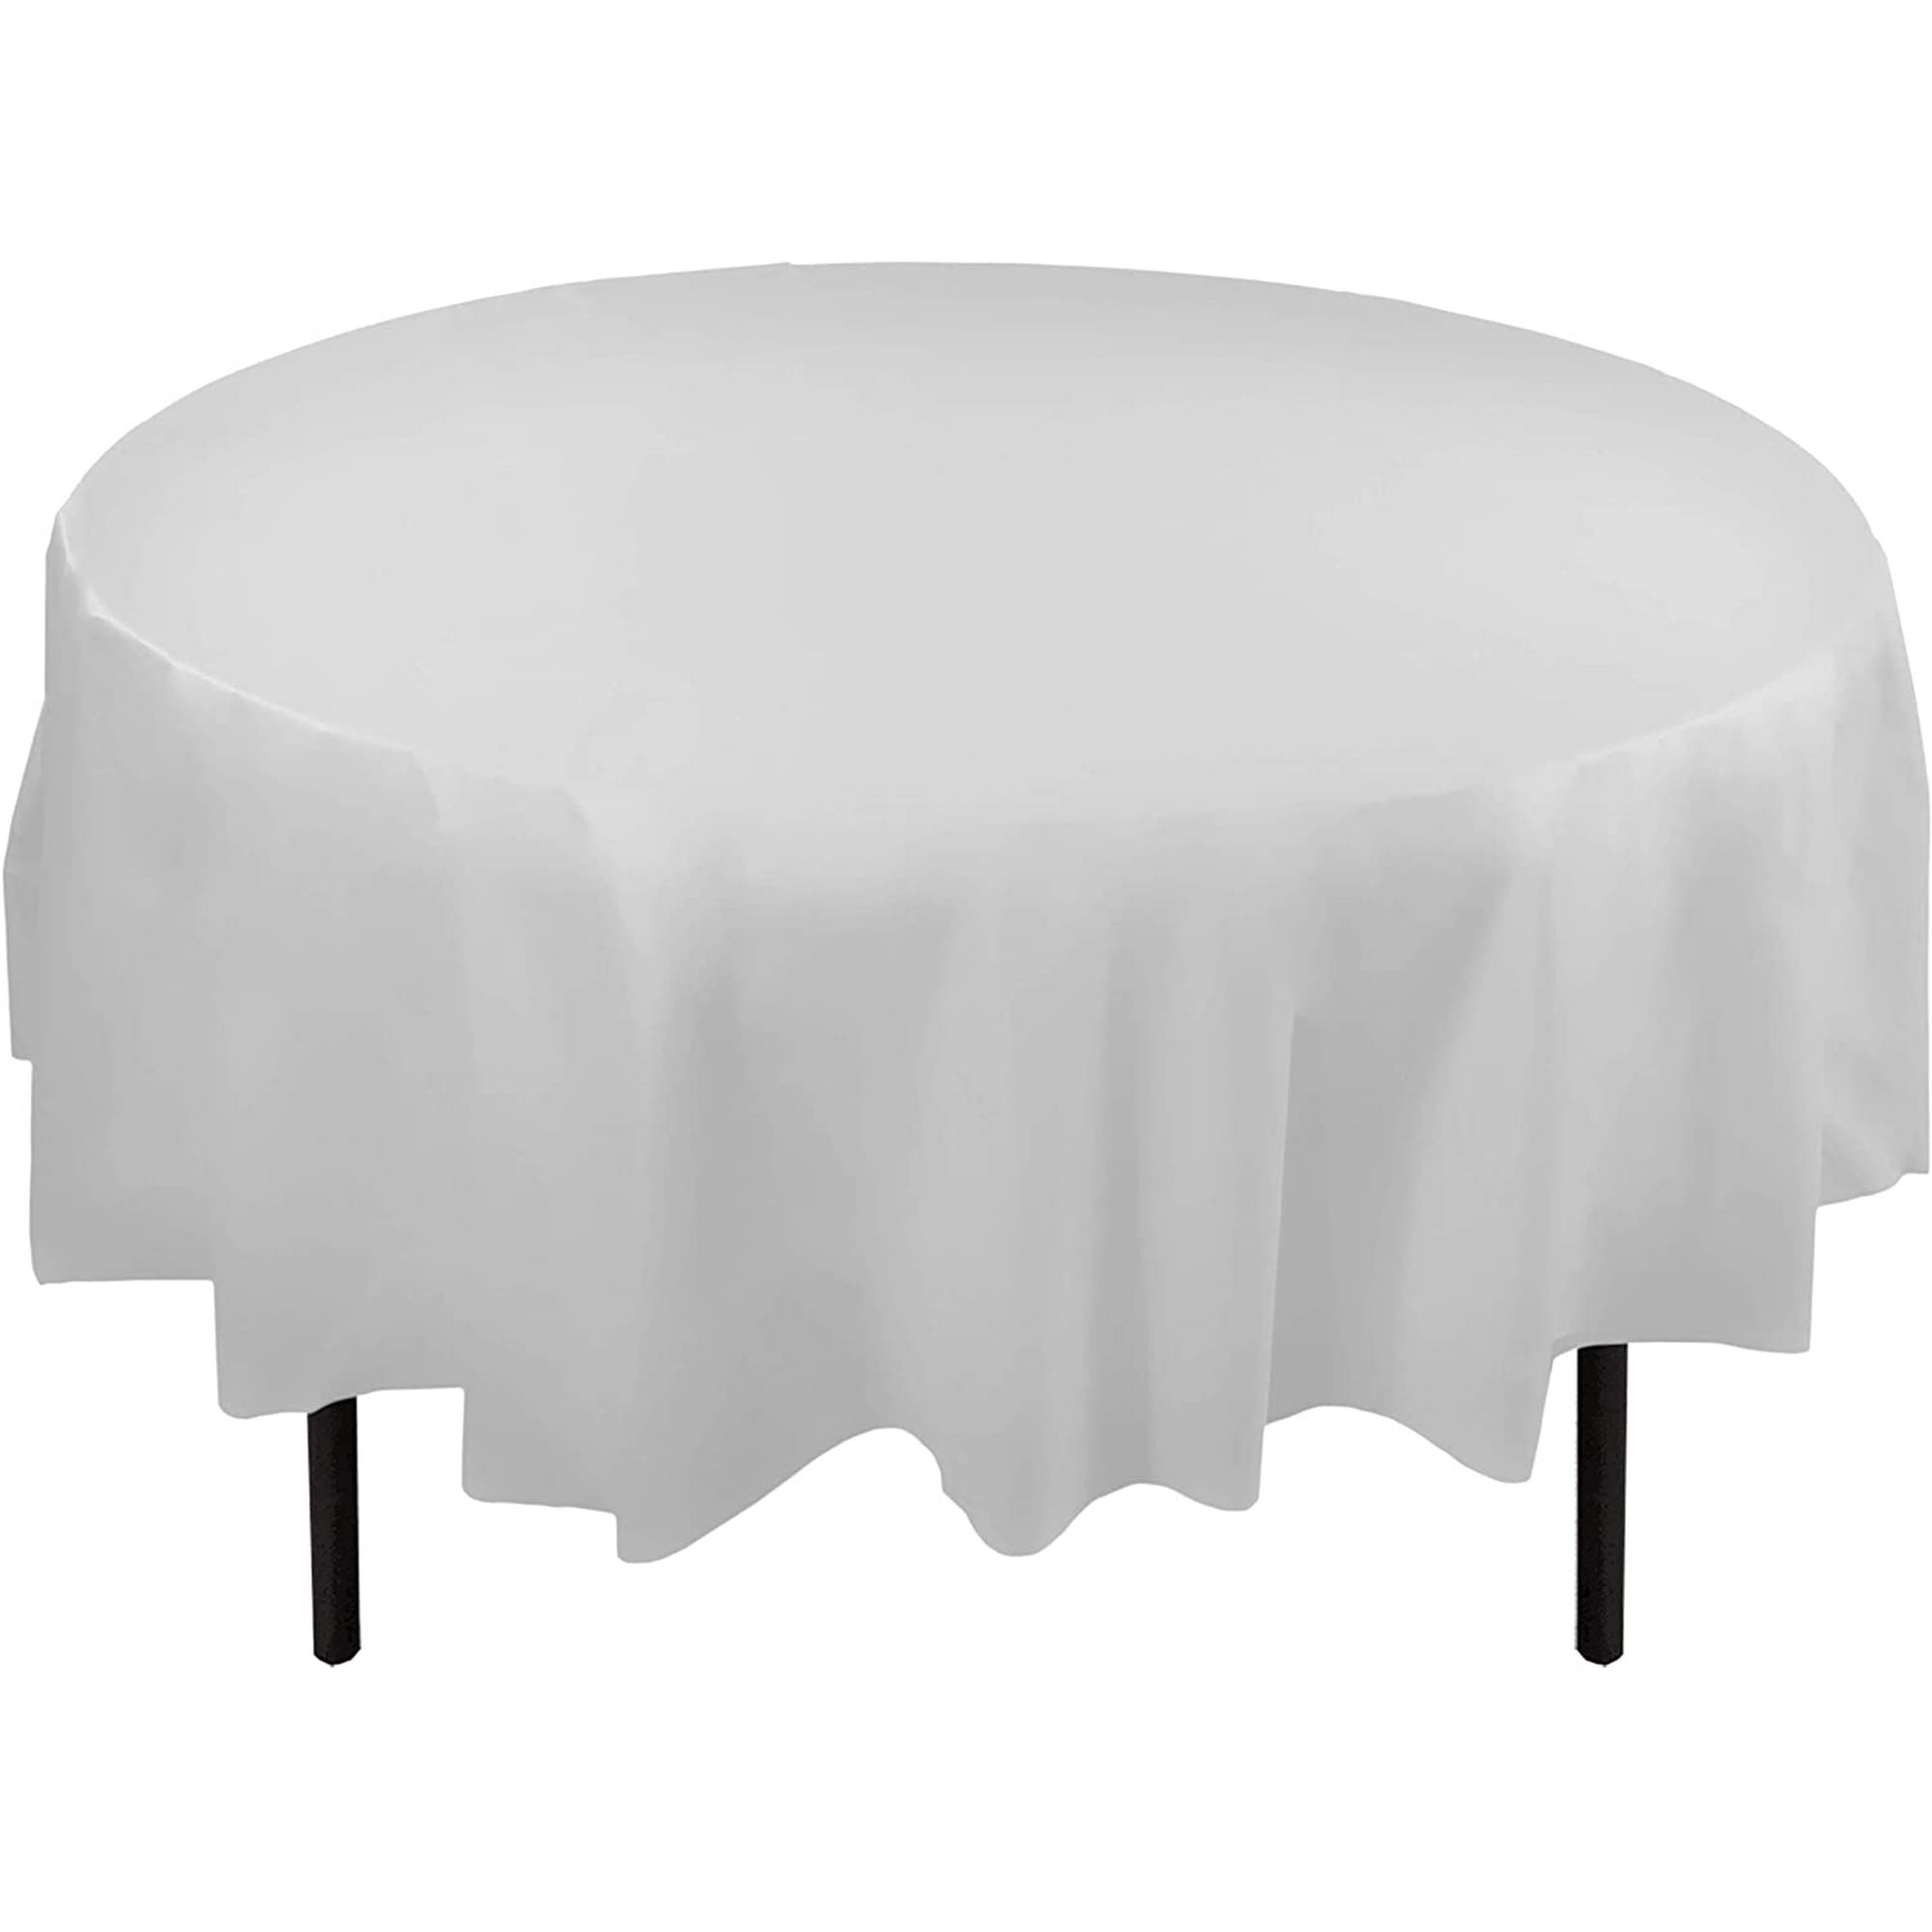 Bulk Premium Plastic Disposable 84 Inch, White Round Tablecloth Bulk